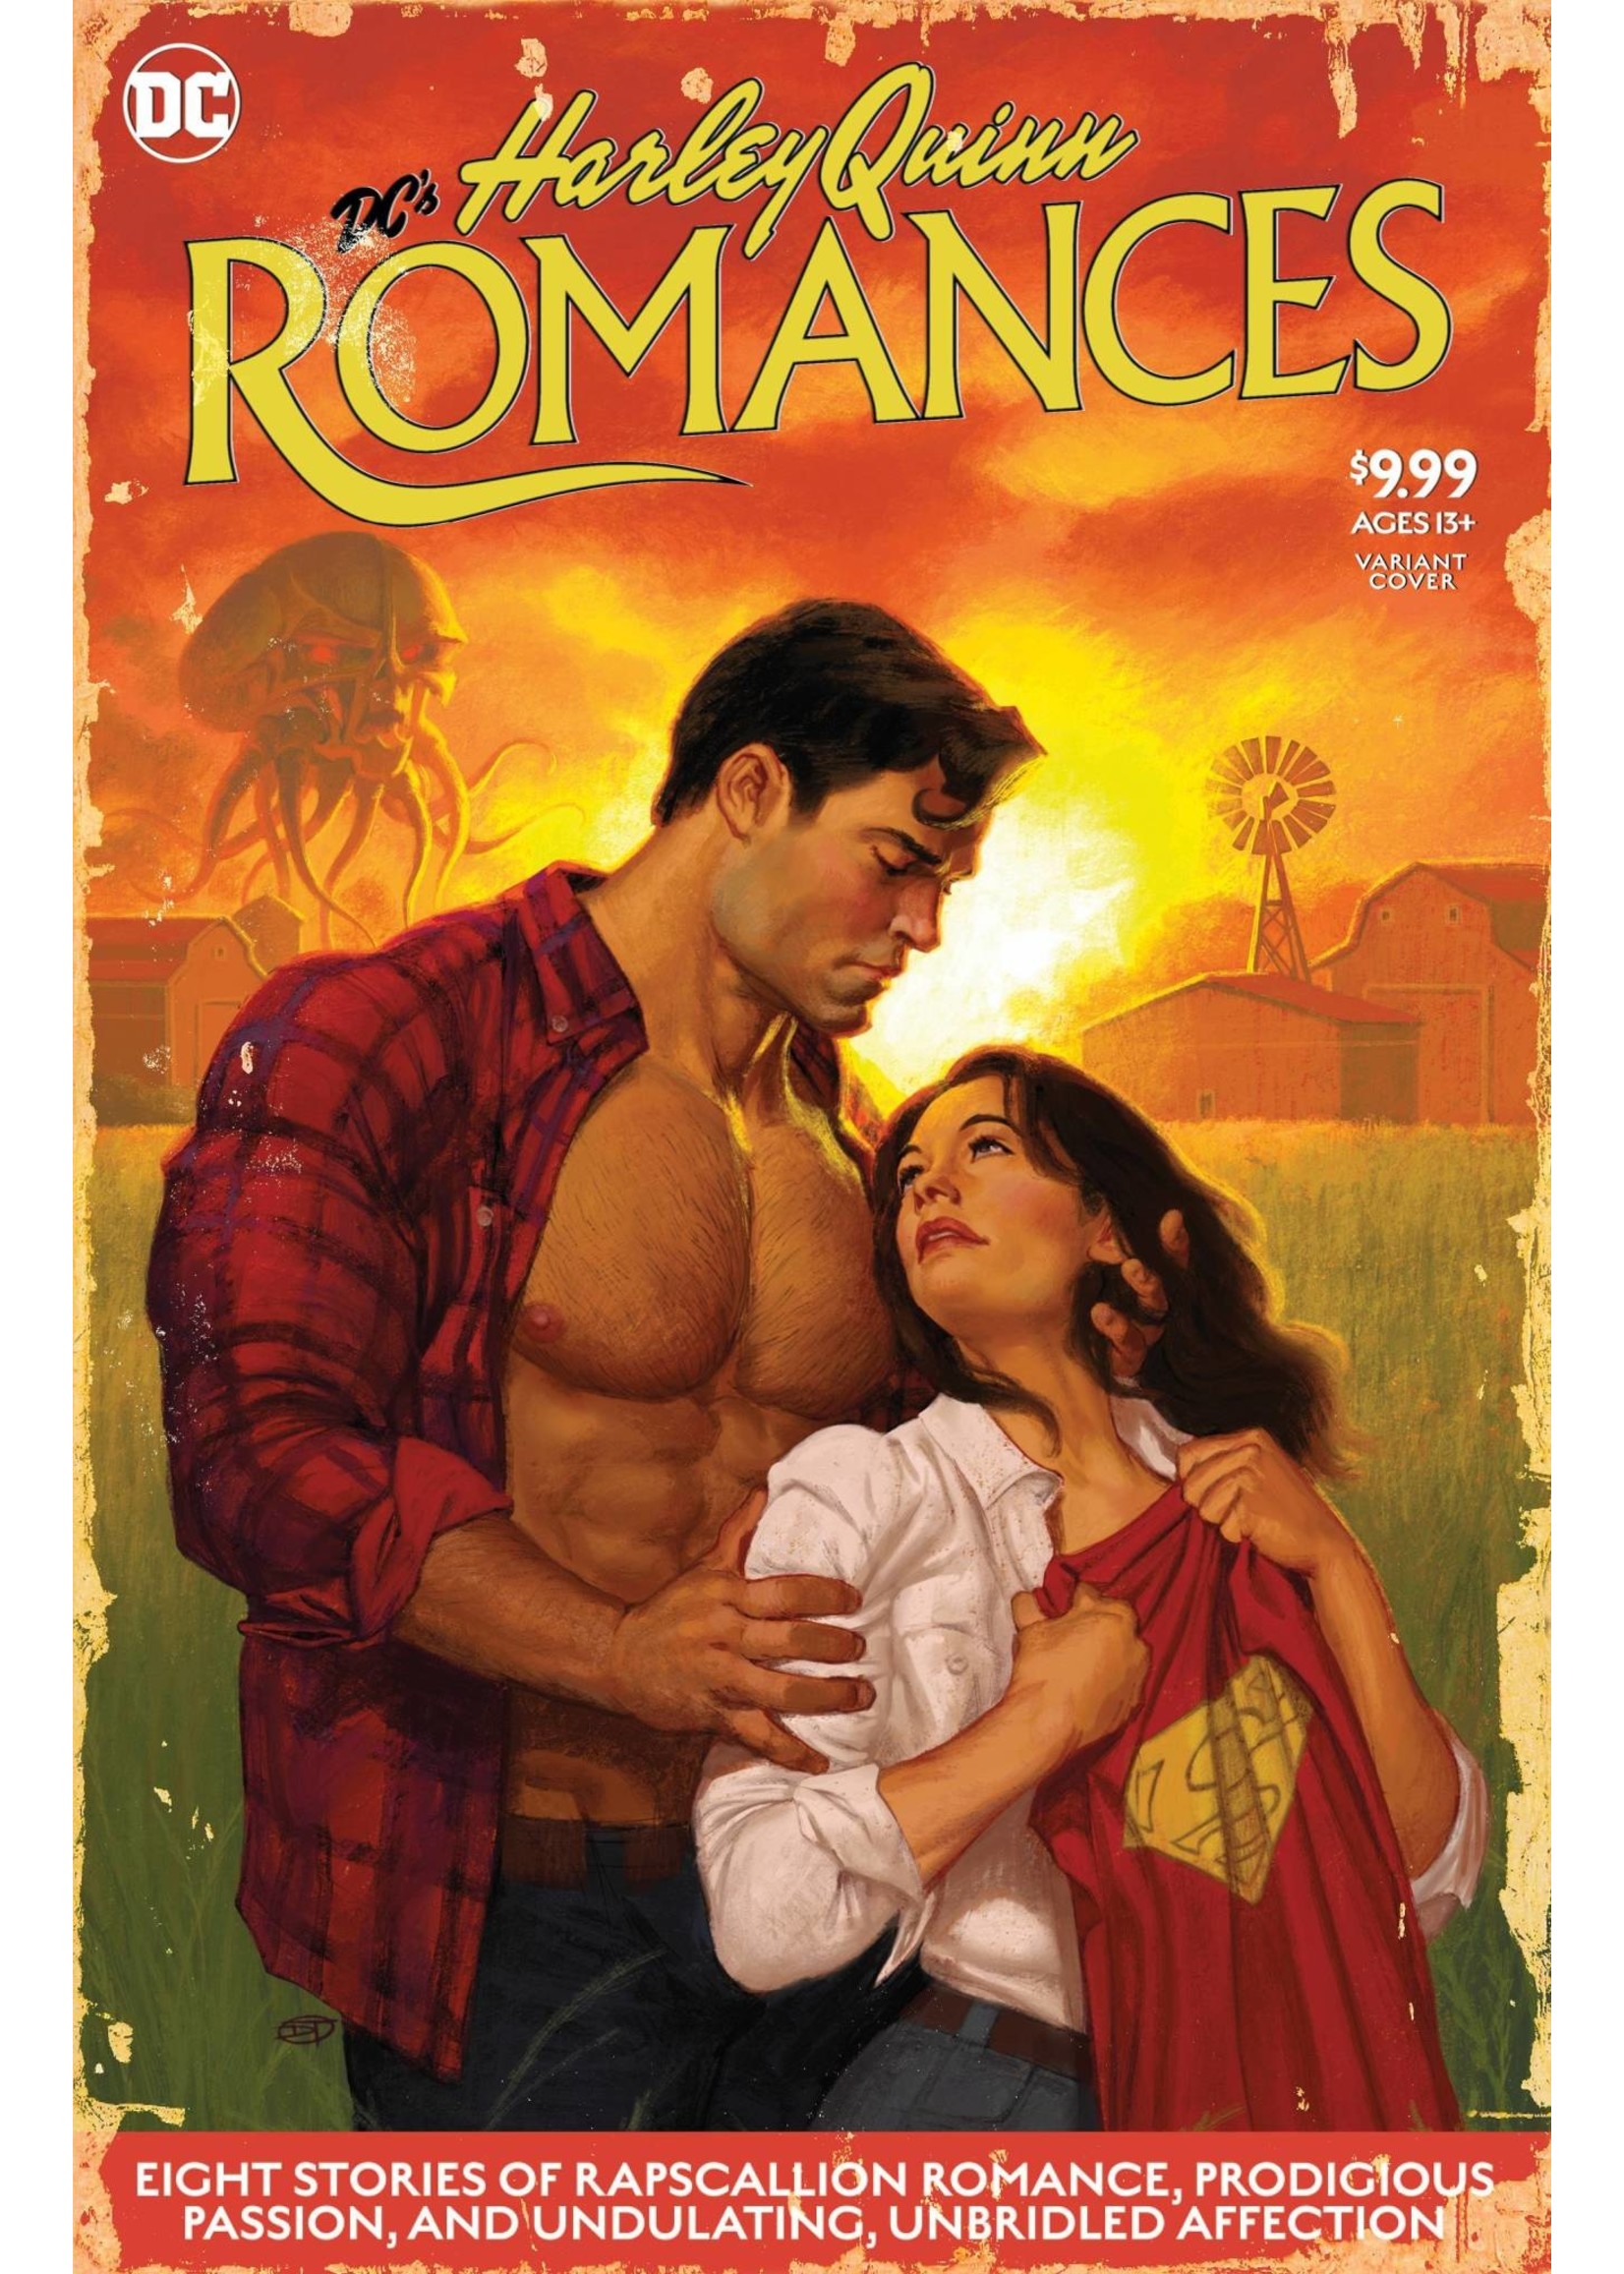 DC COMICS DC'S HARLEY QUINN ROMANCES #1 TALASKI